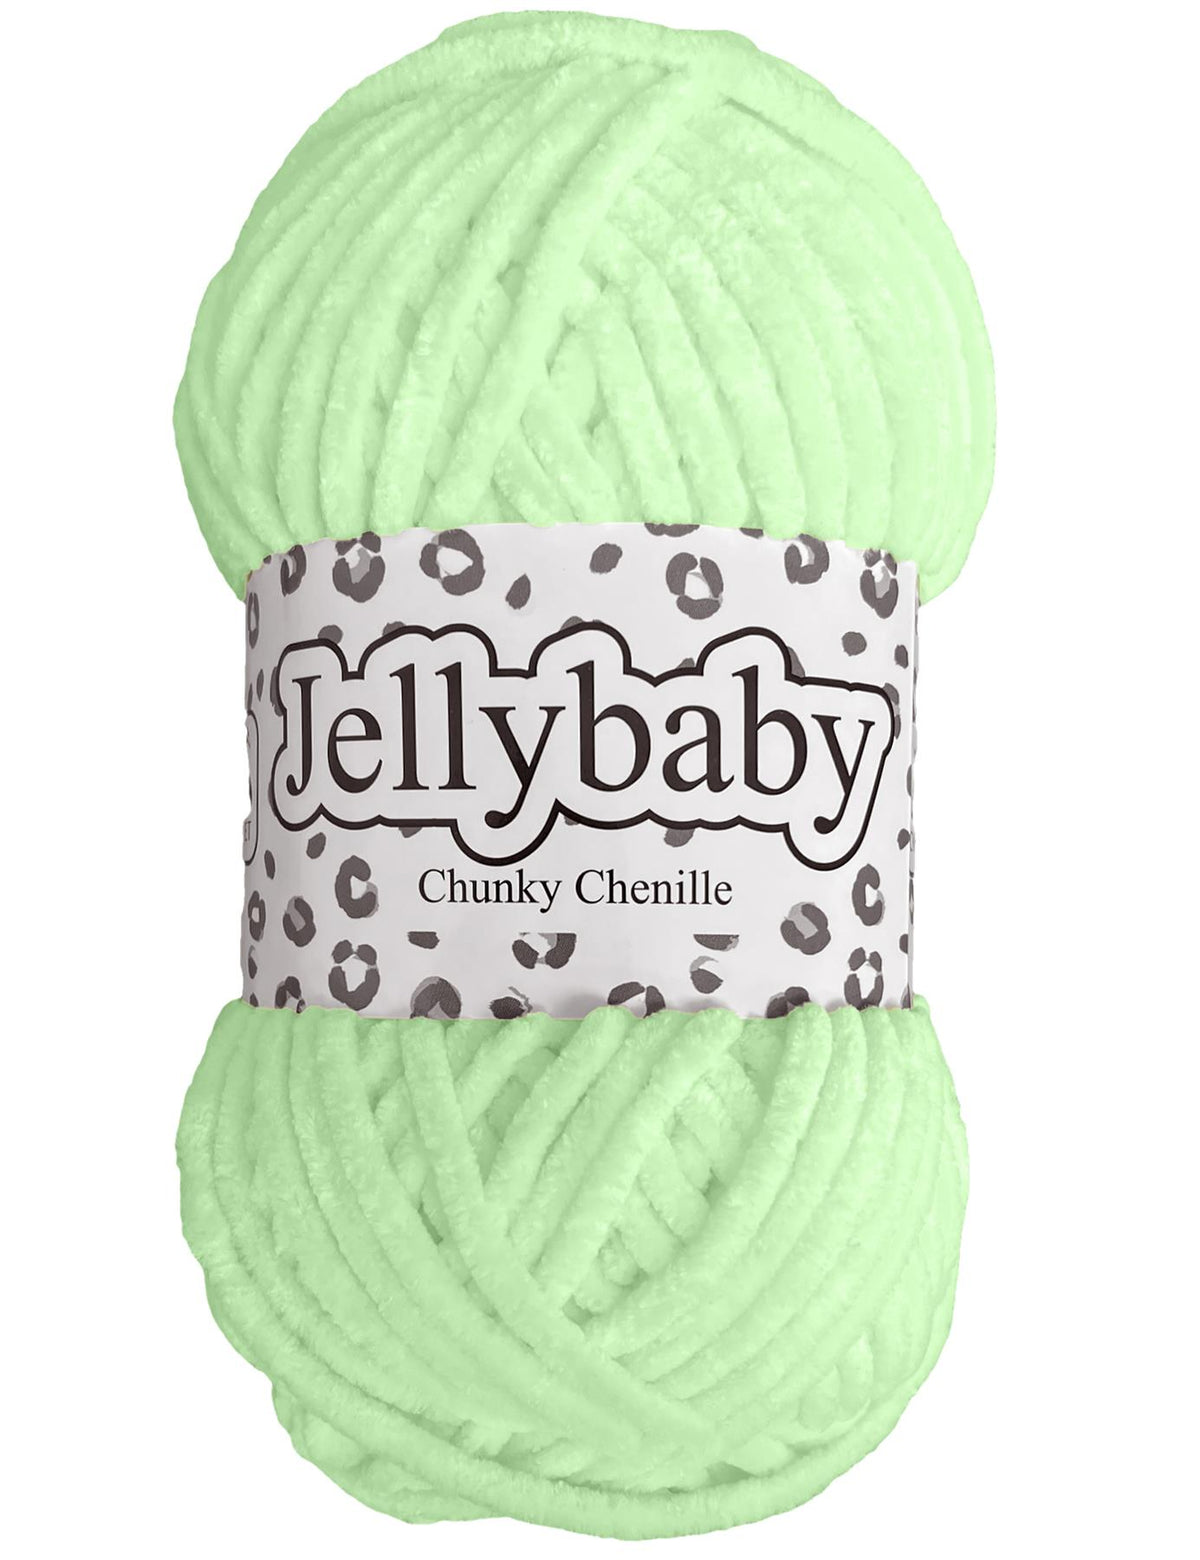 Cygnet Jellybaby Chenille Chunky Mint Tea (009) -100g